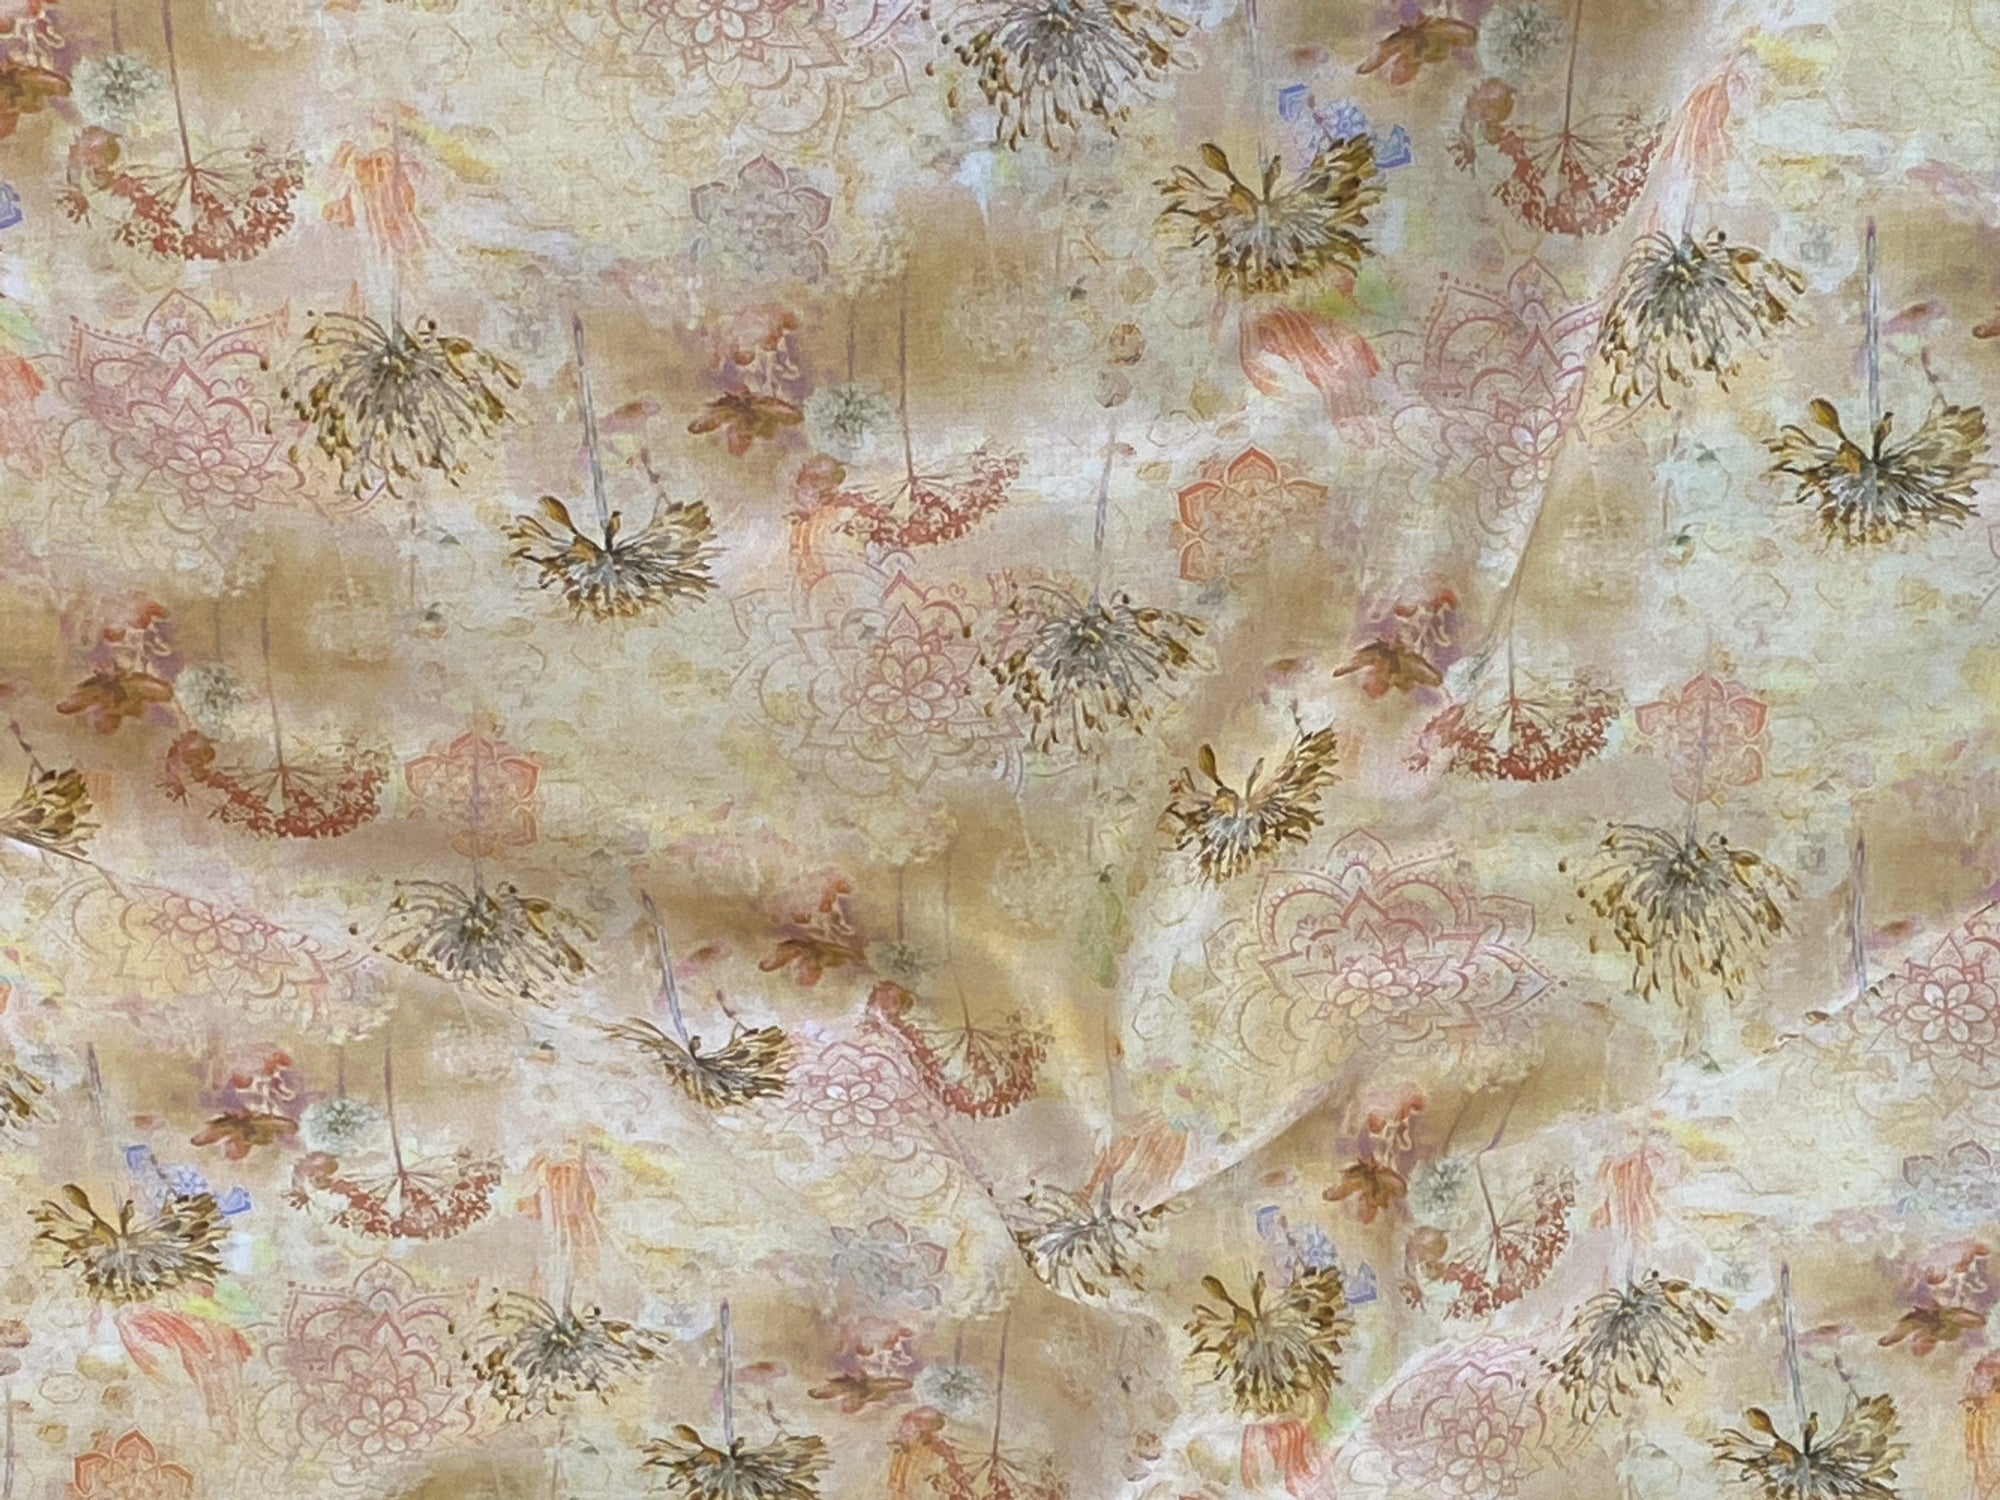 Enchanted Floral  - Digital Printed Cotton